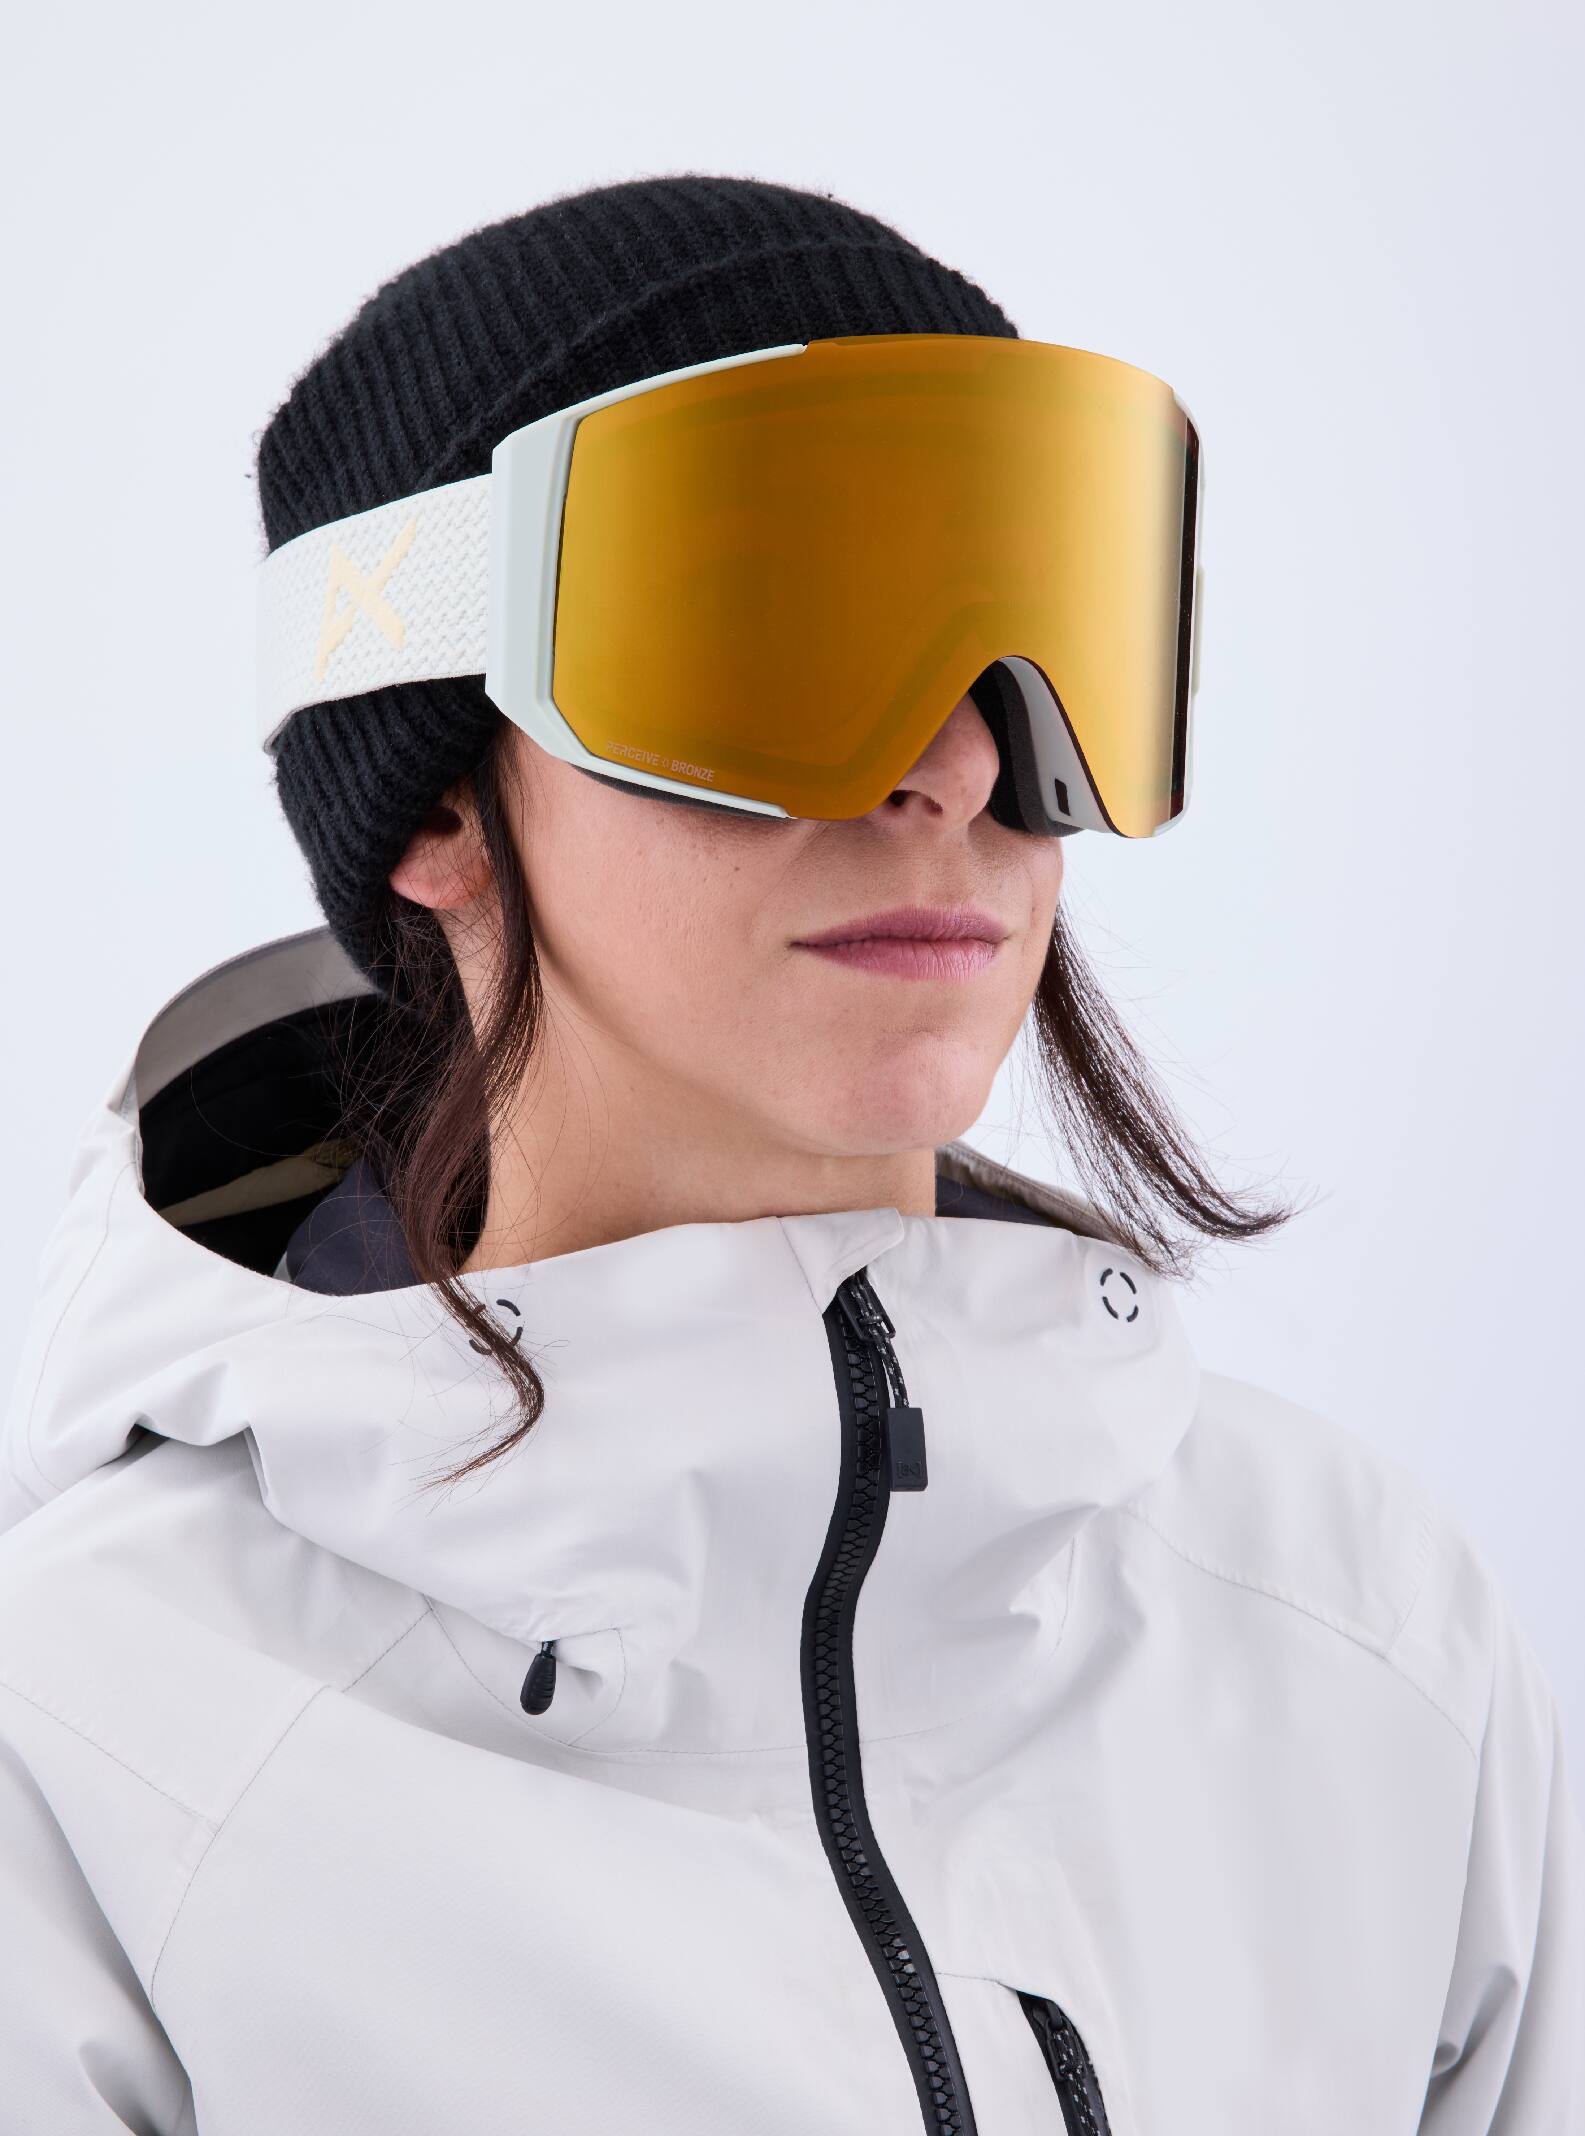 Women's Goggles & Lenses | Ski & Snowboard Goggles for Women 